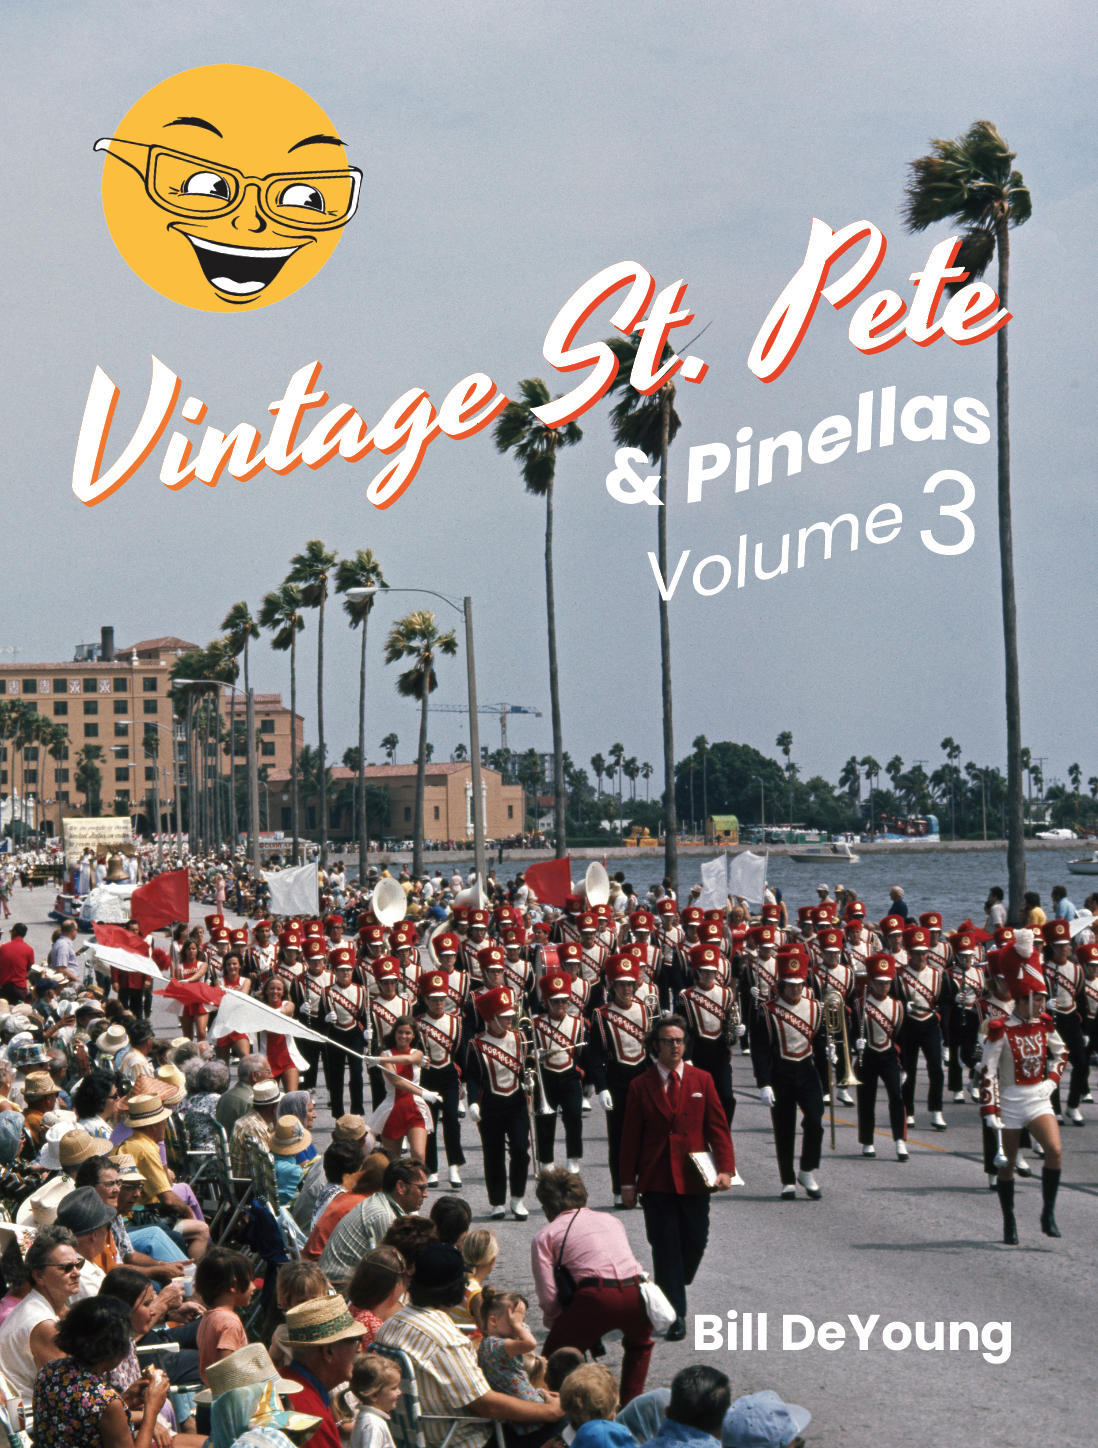 “Vintage St. Pete & Pinellas Volume 3” Book Release Party